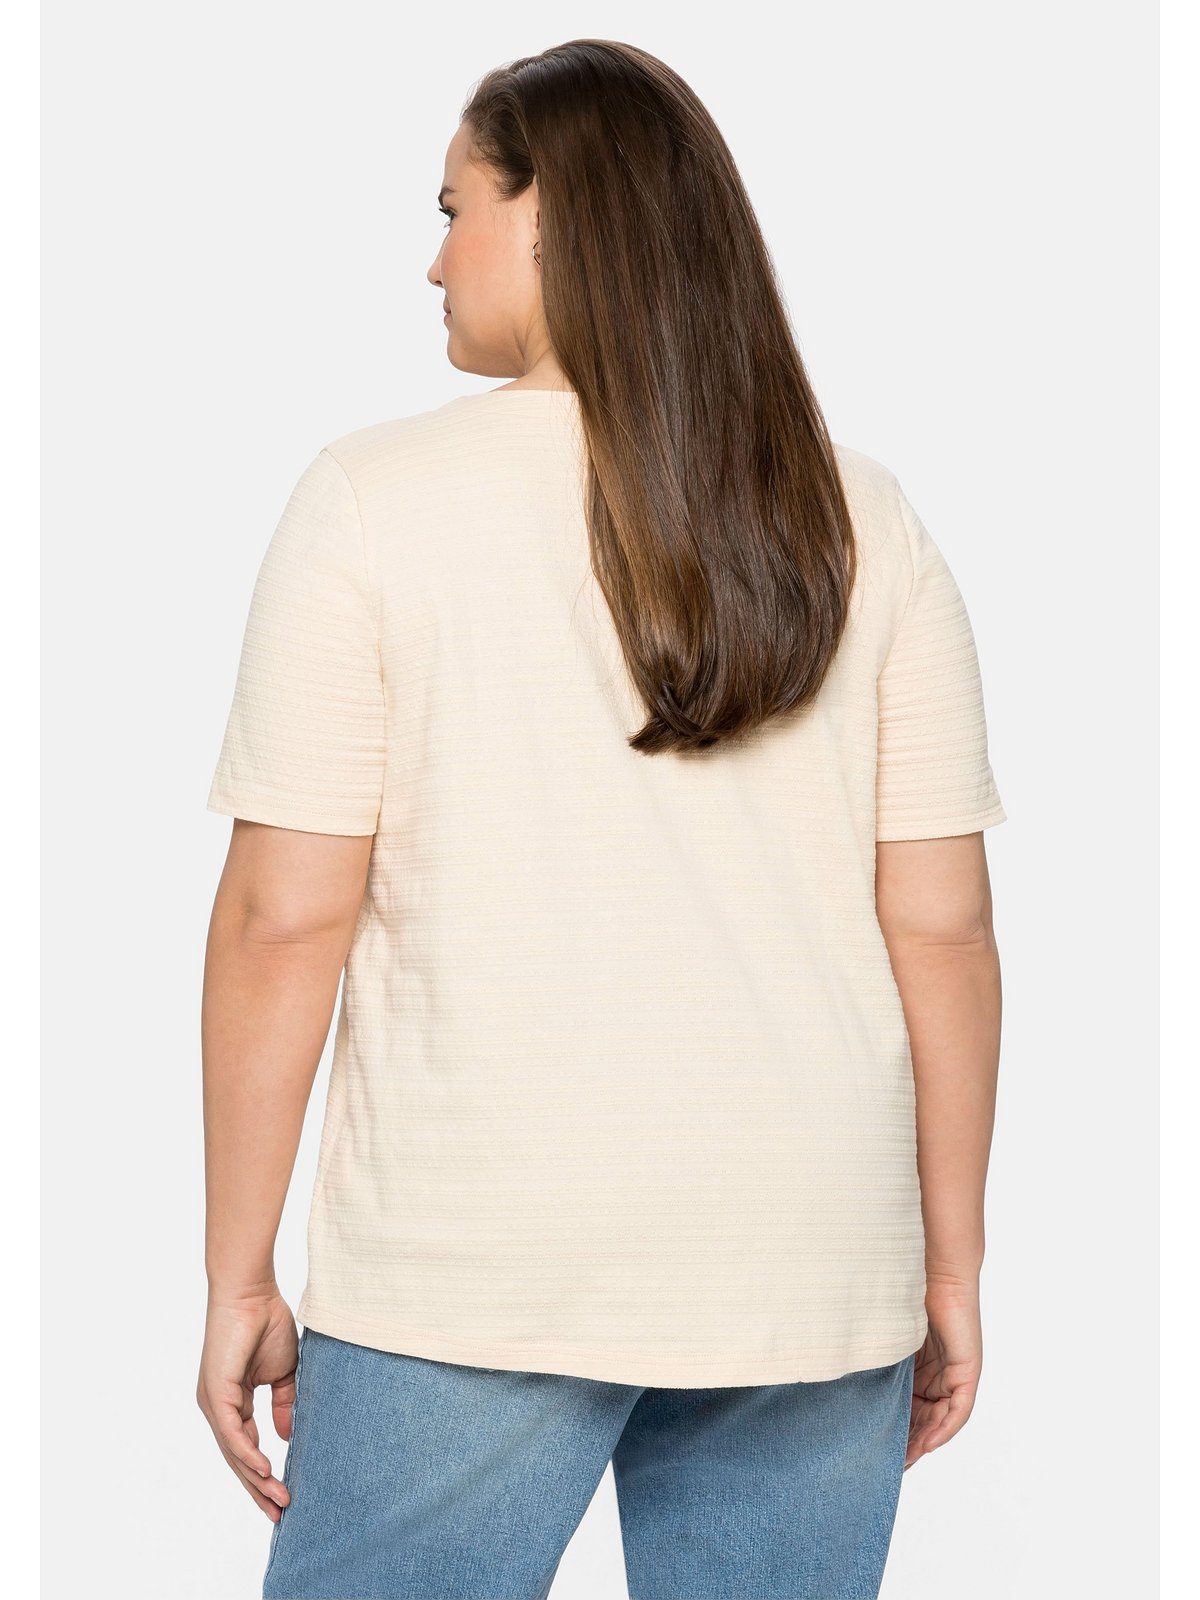 Sheego T-Shirt Große Größen in mit Jacquard-Optik, Bindeband